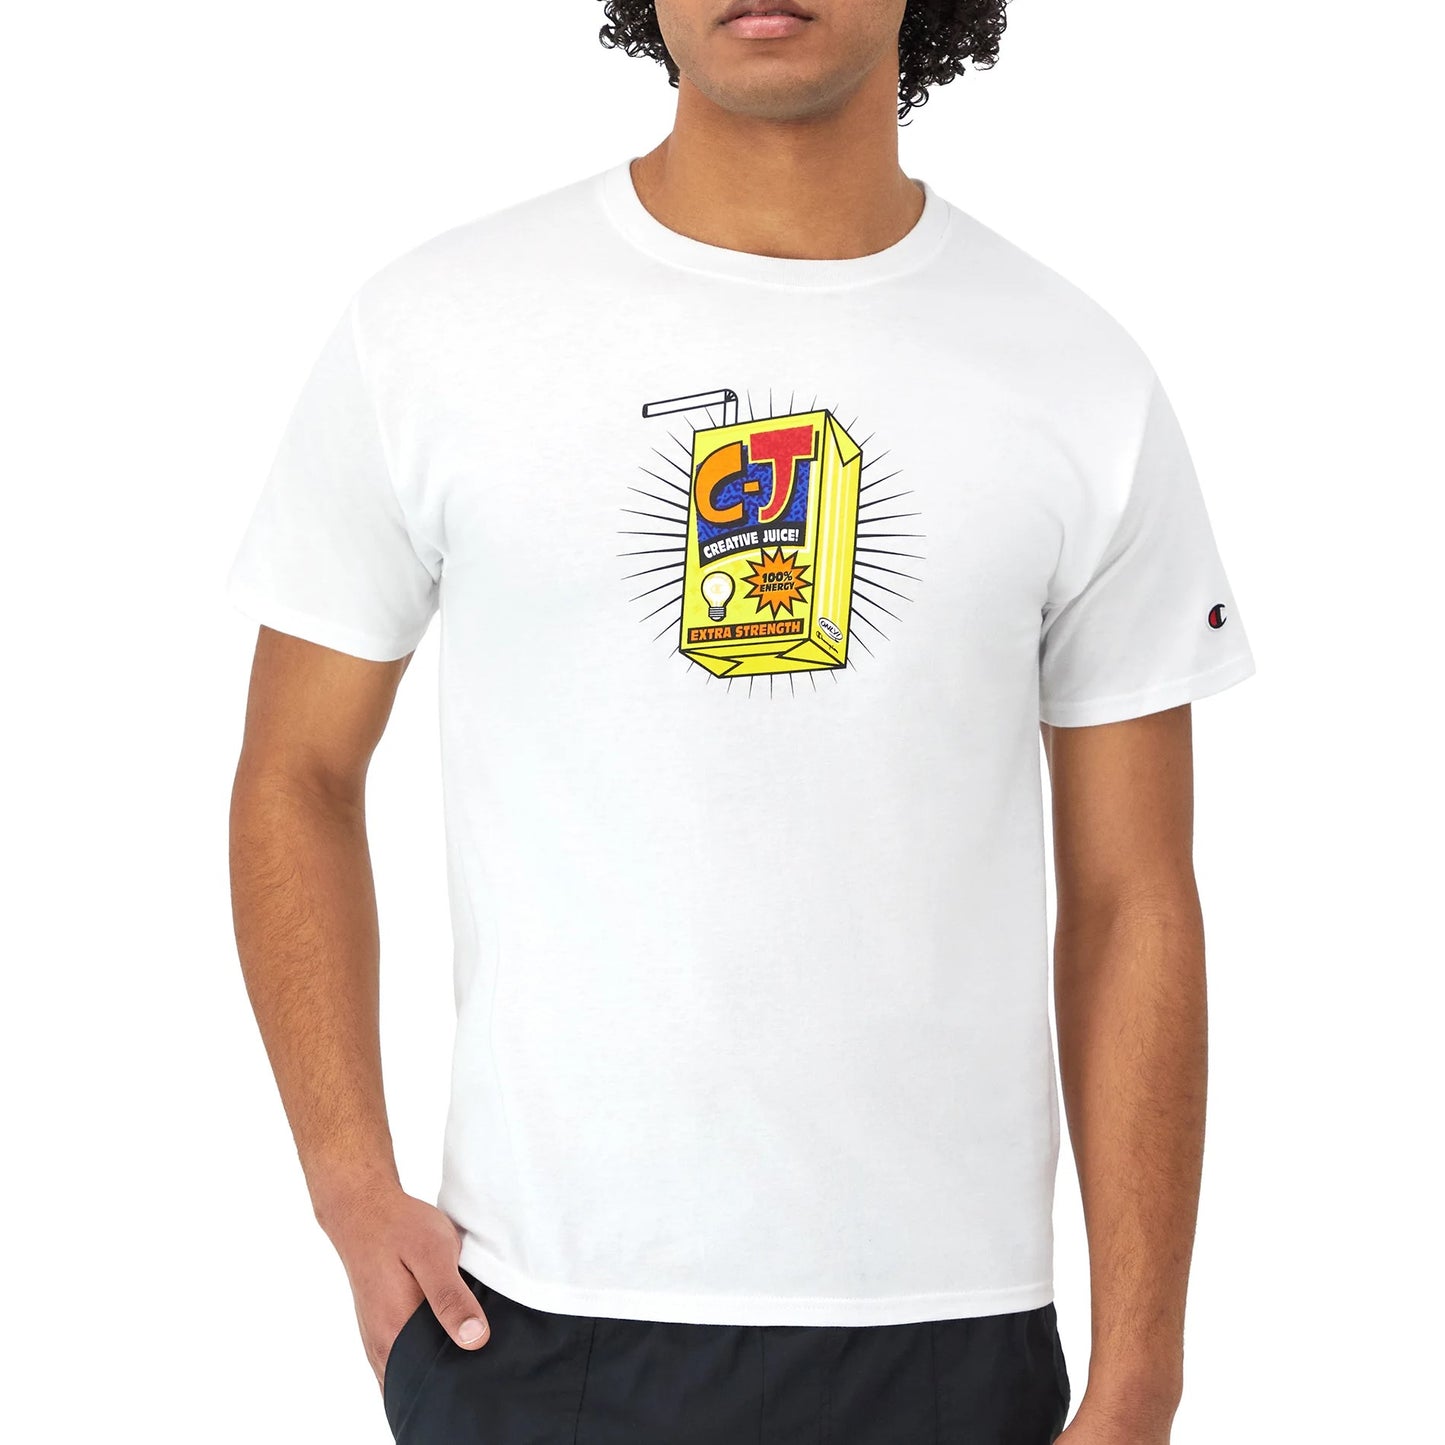 CHAMPION Creative Juice Classic Graphic T-Shirt - White